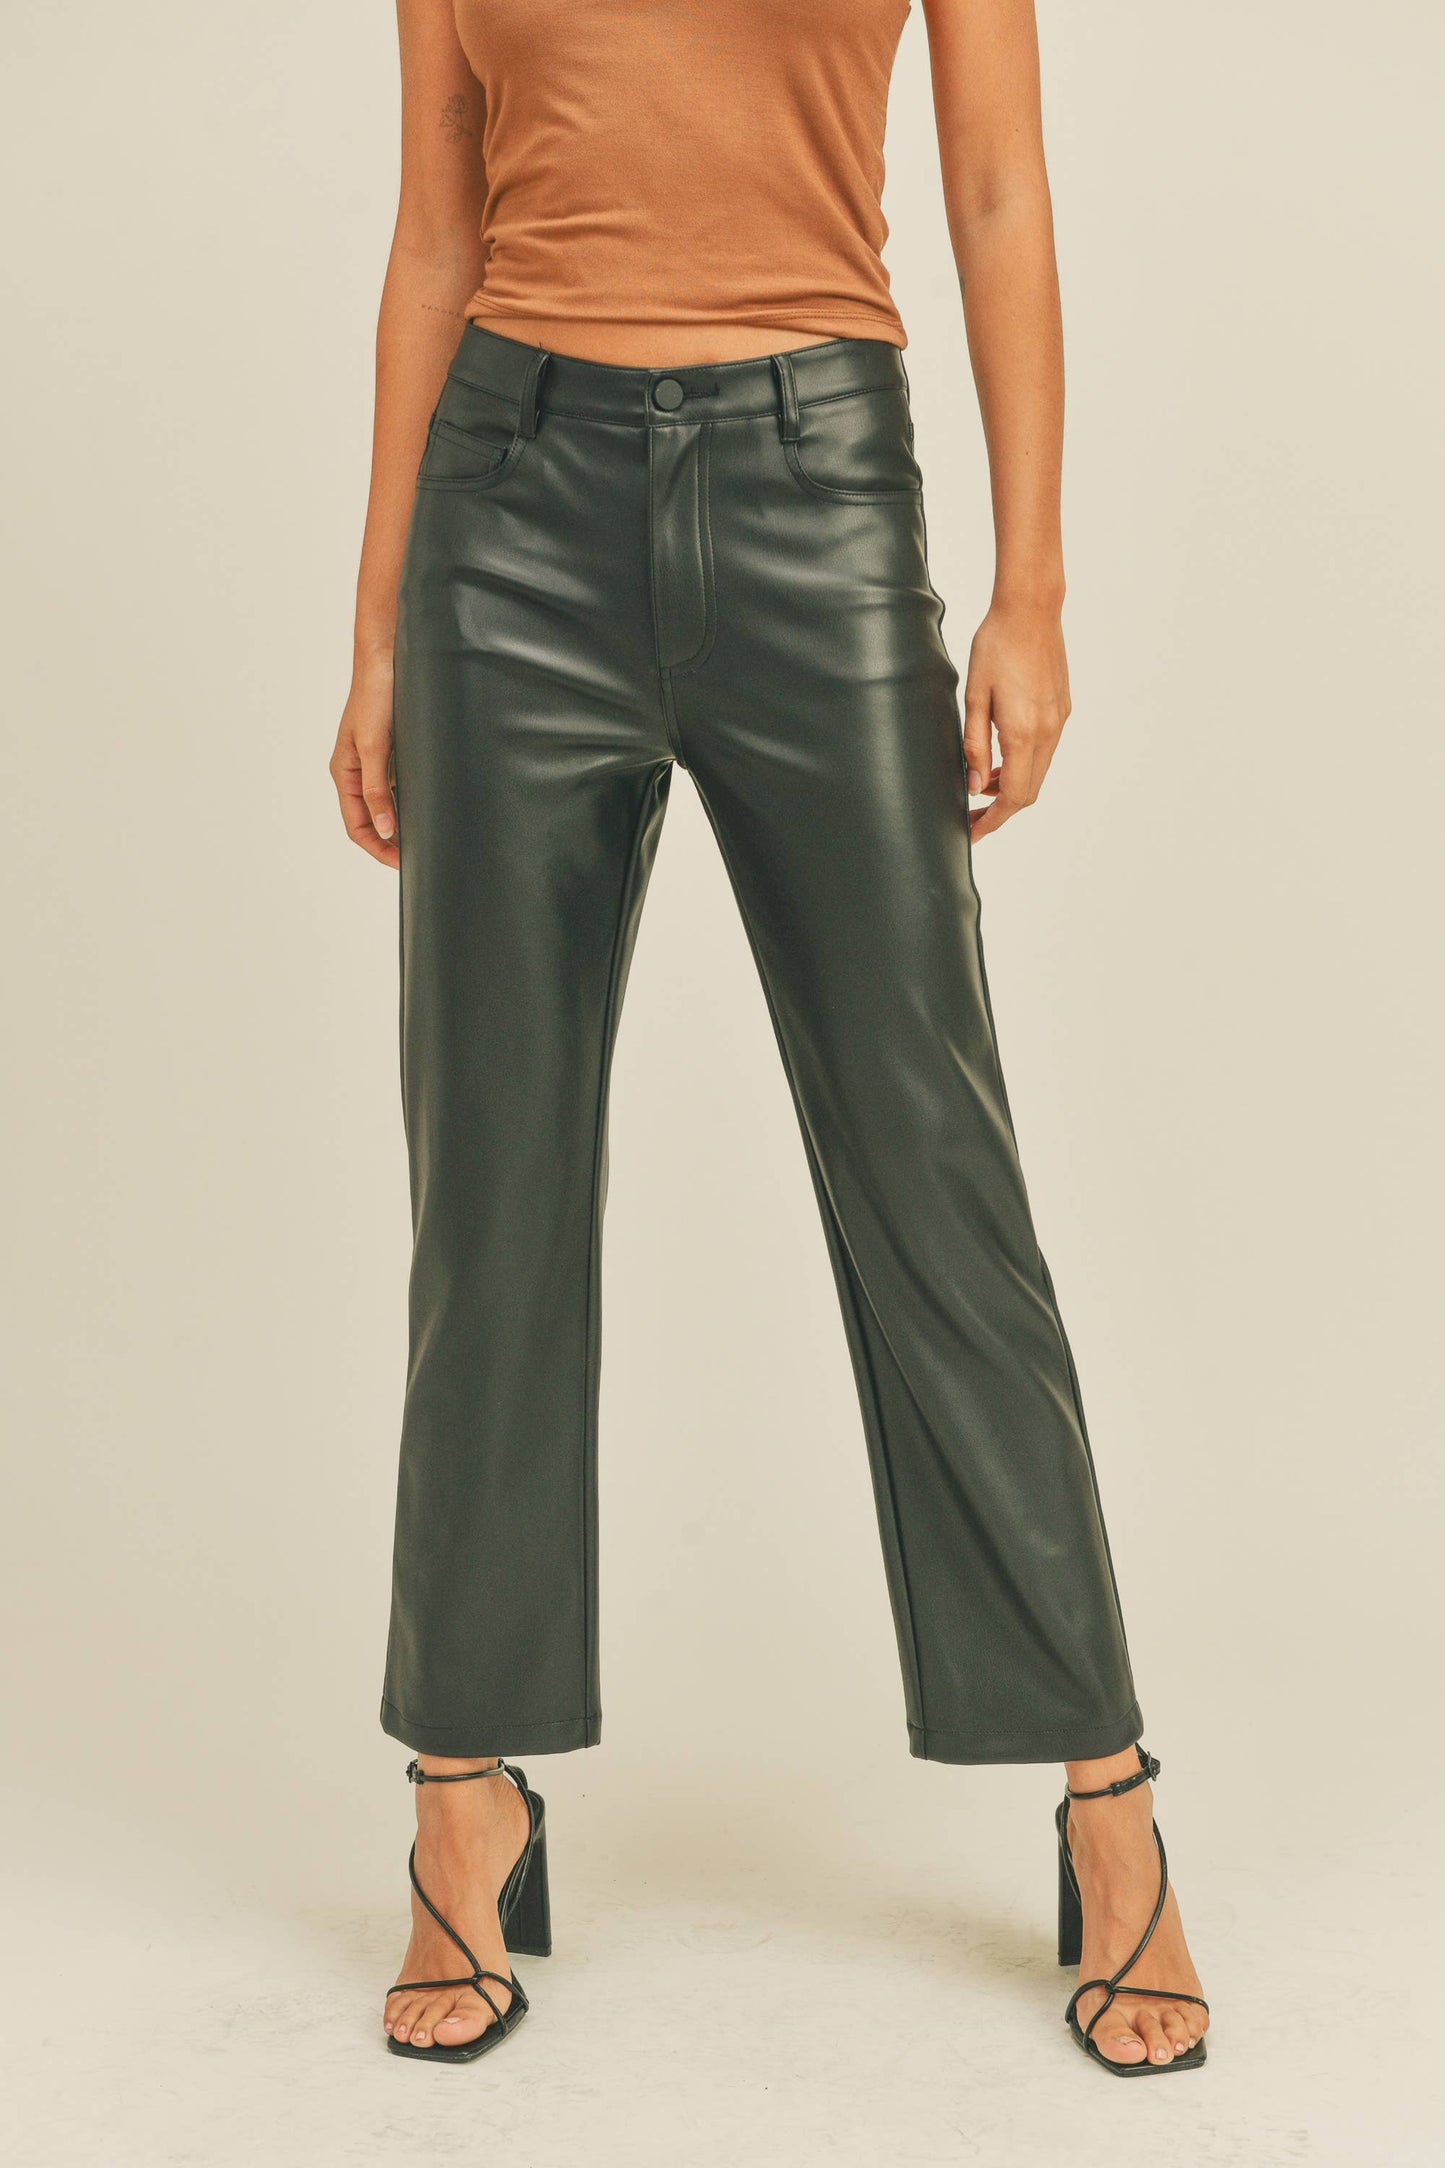 Olivia Black Faux Leather Pants